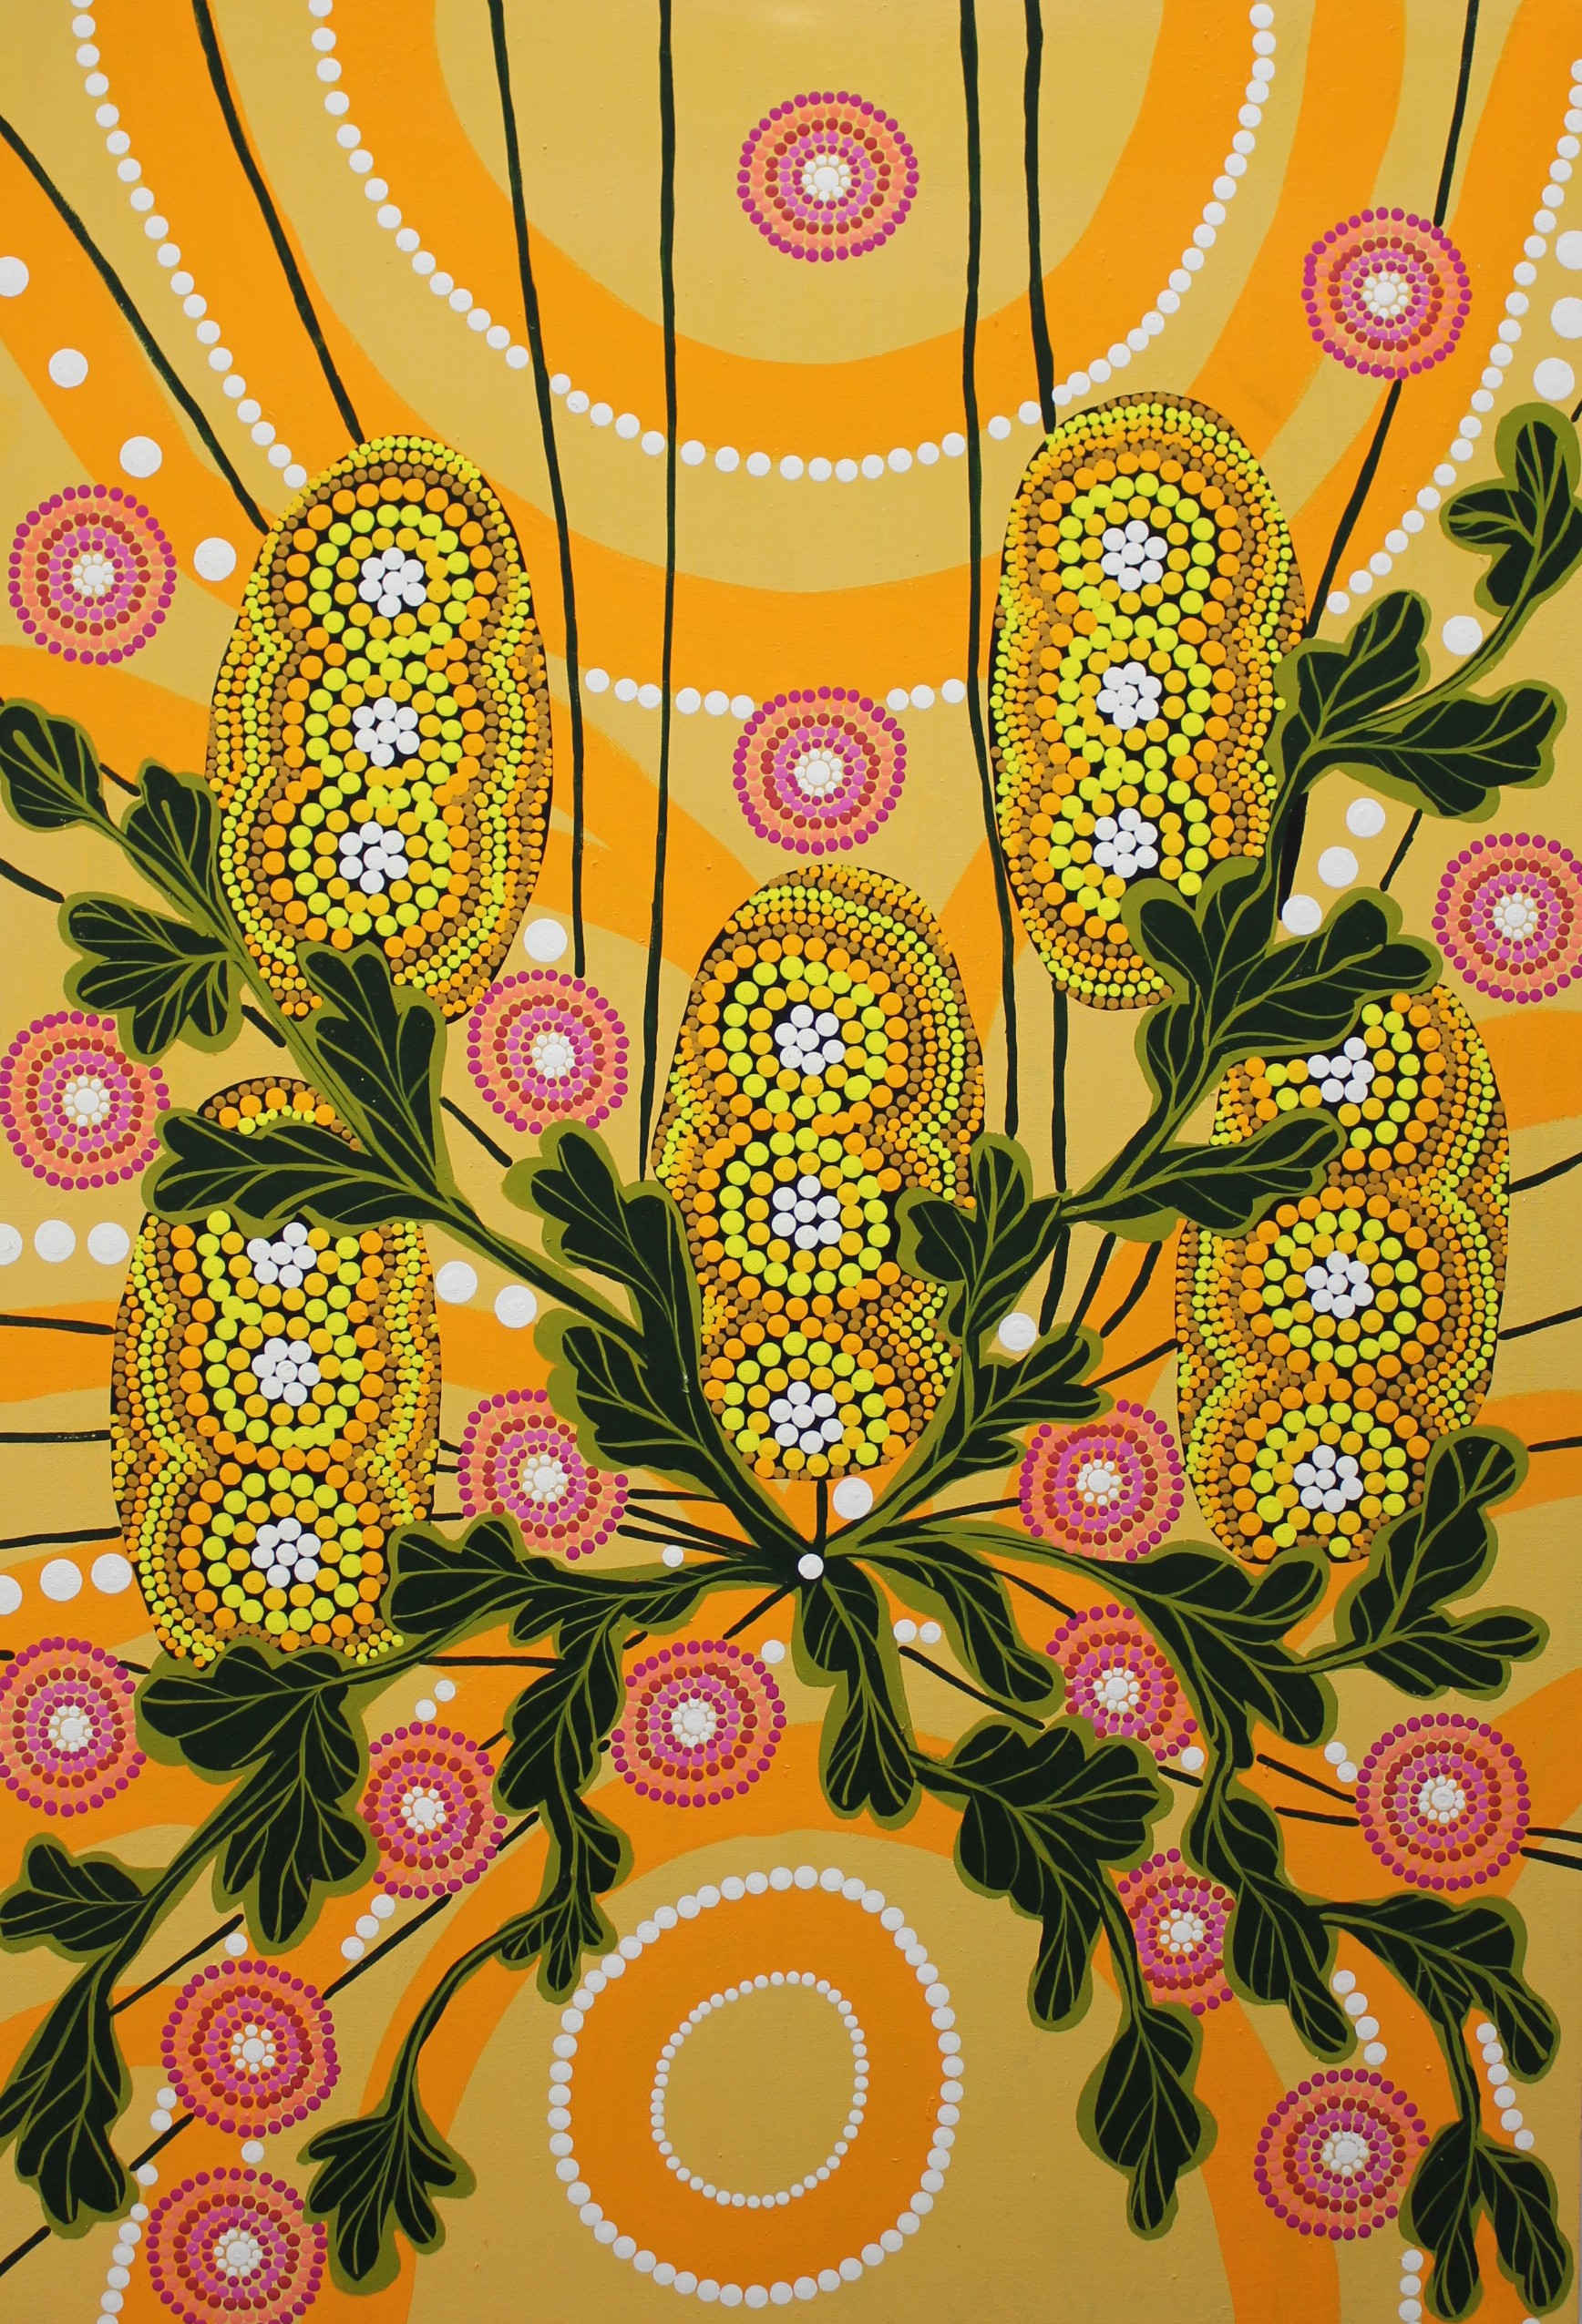 Bunuru artwork depicted the Noongar season from February to March